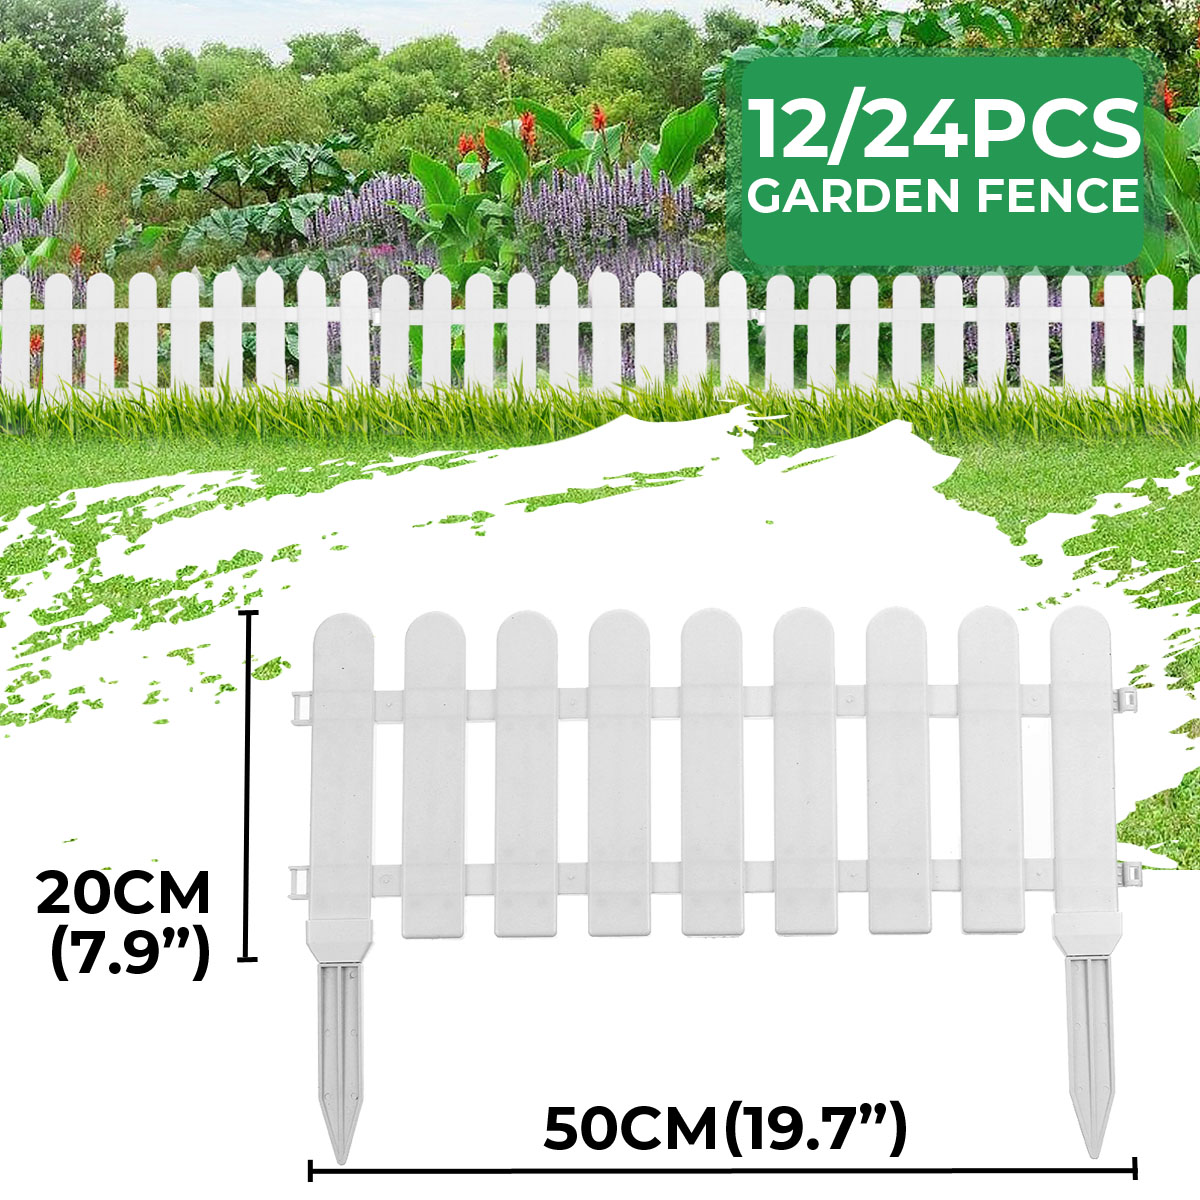 20--40-FT-Plastic-Garden-Border-Fencing-Fence-Pannels-Outdoor-Landscape-Decor-Edging-Yard-12-24-PCS-1959719-1